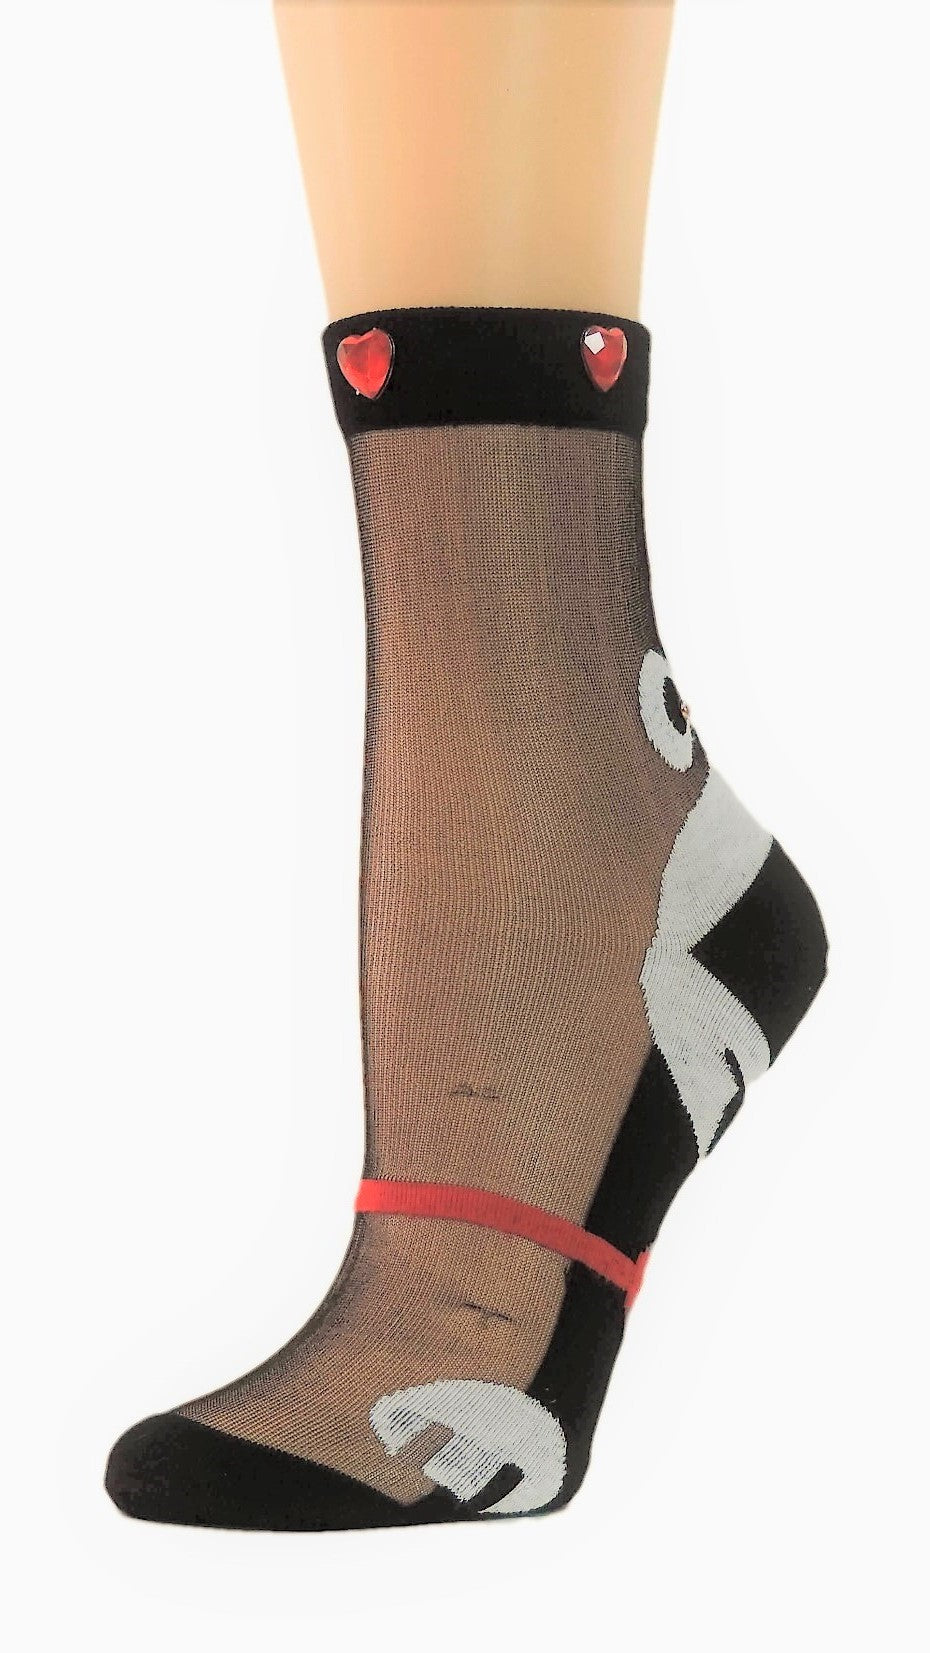 Puppy Custom Sheer Socks with Beads - Global Trendz Fashion®